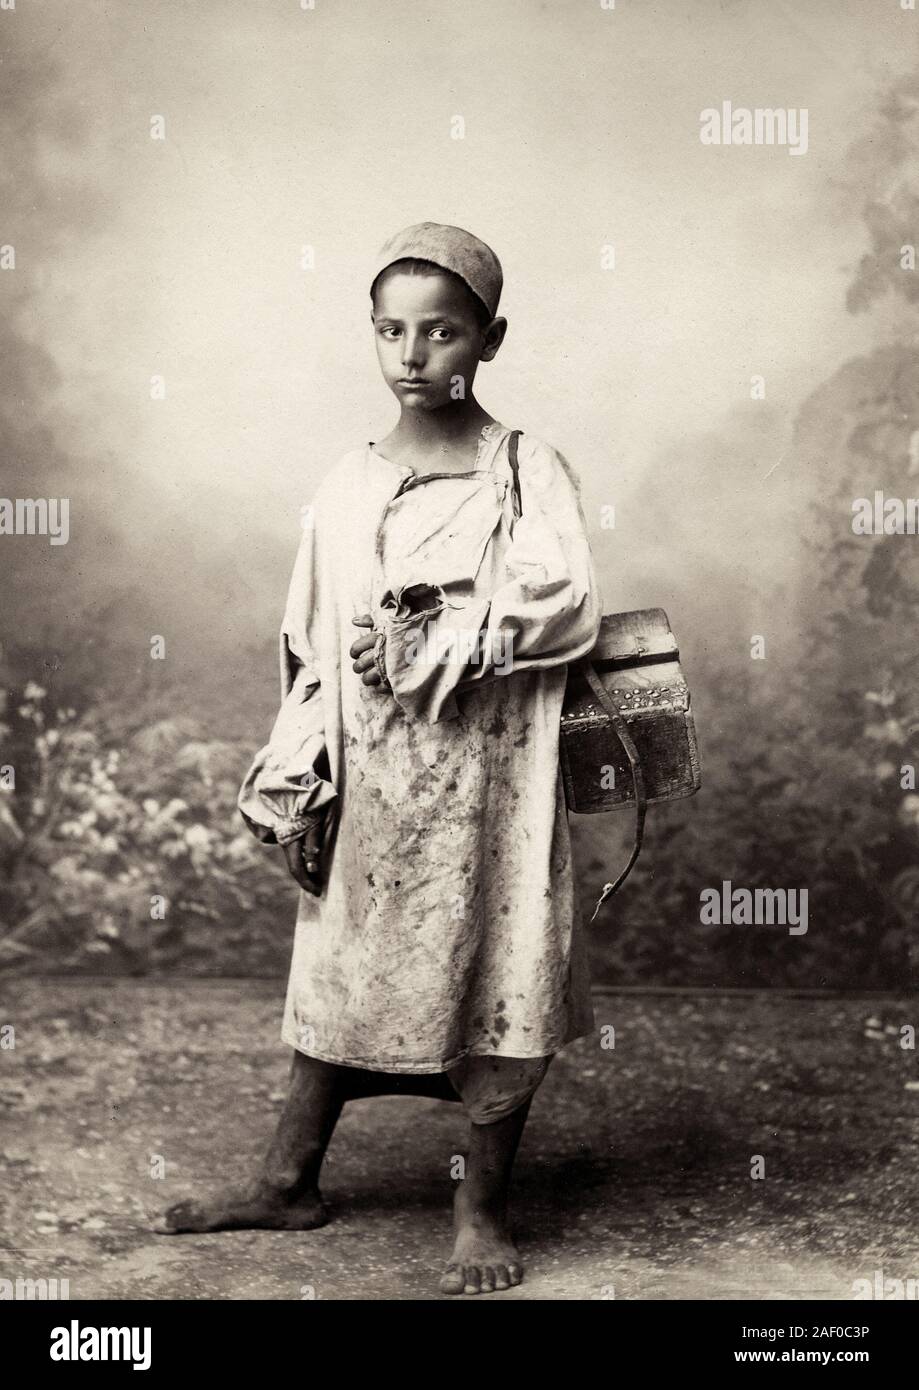 Barefoot shoeshine boy, North Africa, possibly Egypt, c.1880s. Stock Photo